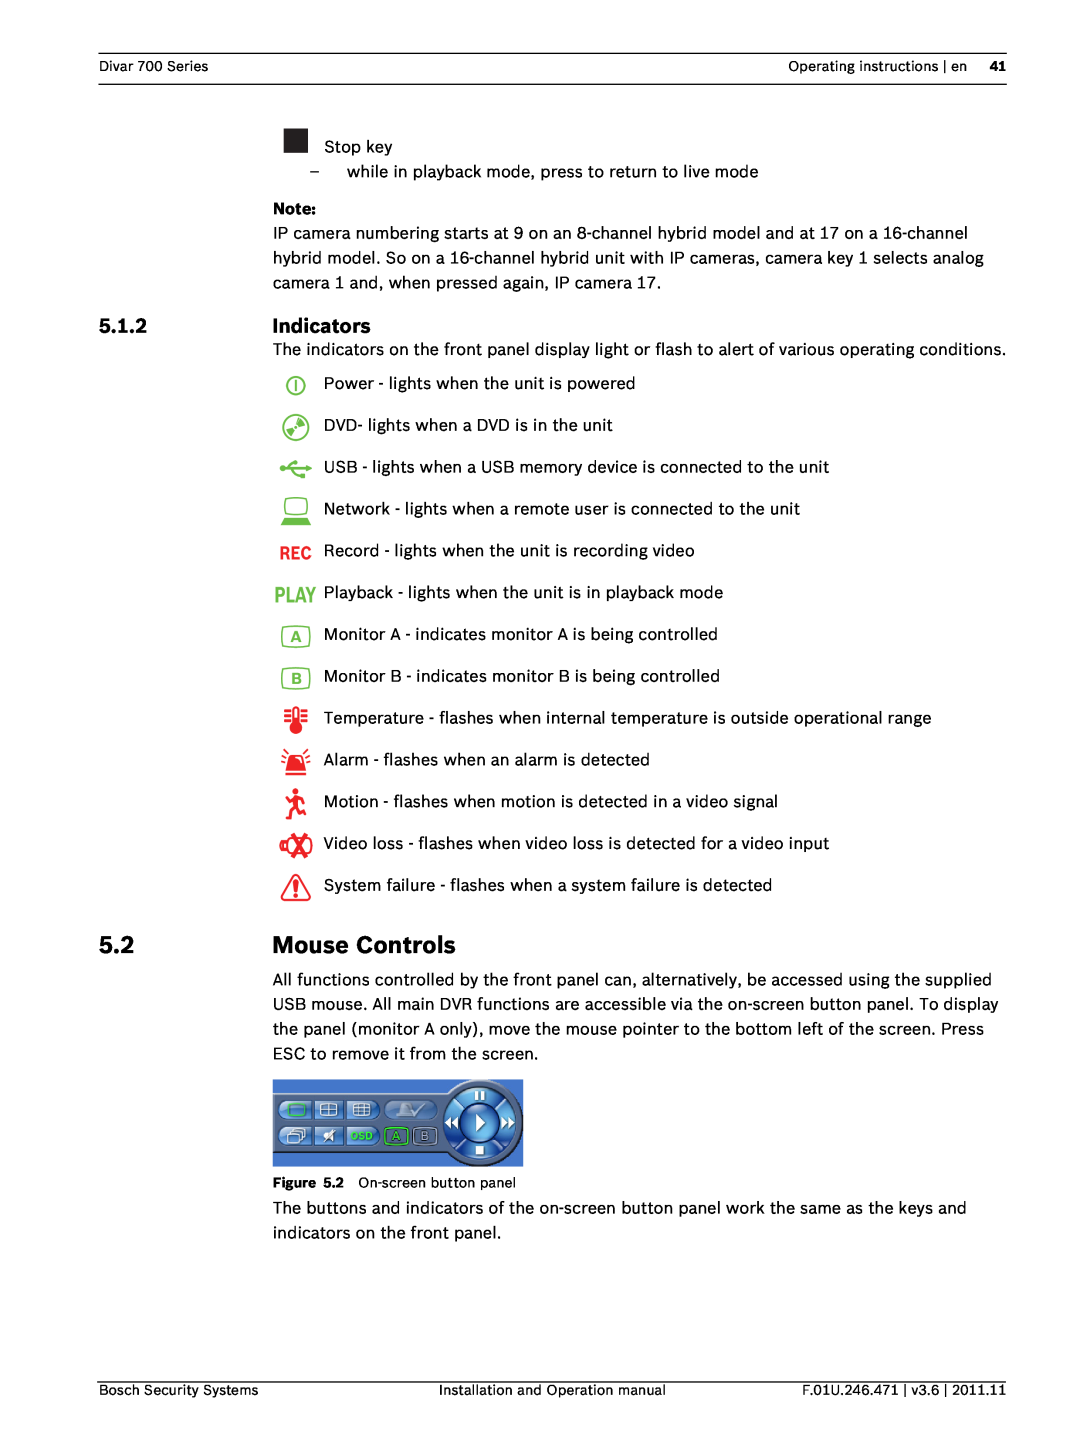 Bosch Appliances 700 operation manual 5.2Mouse Controls, 5.1.2, Indicators 